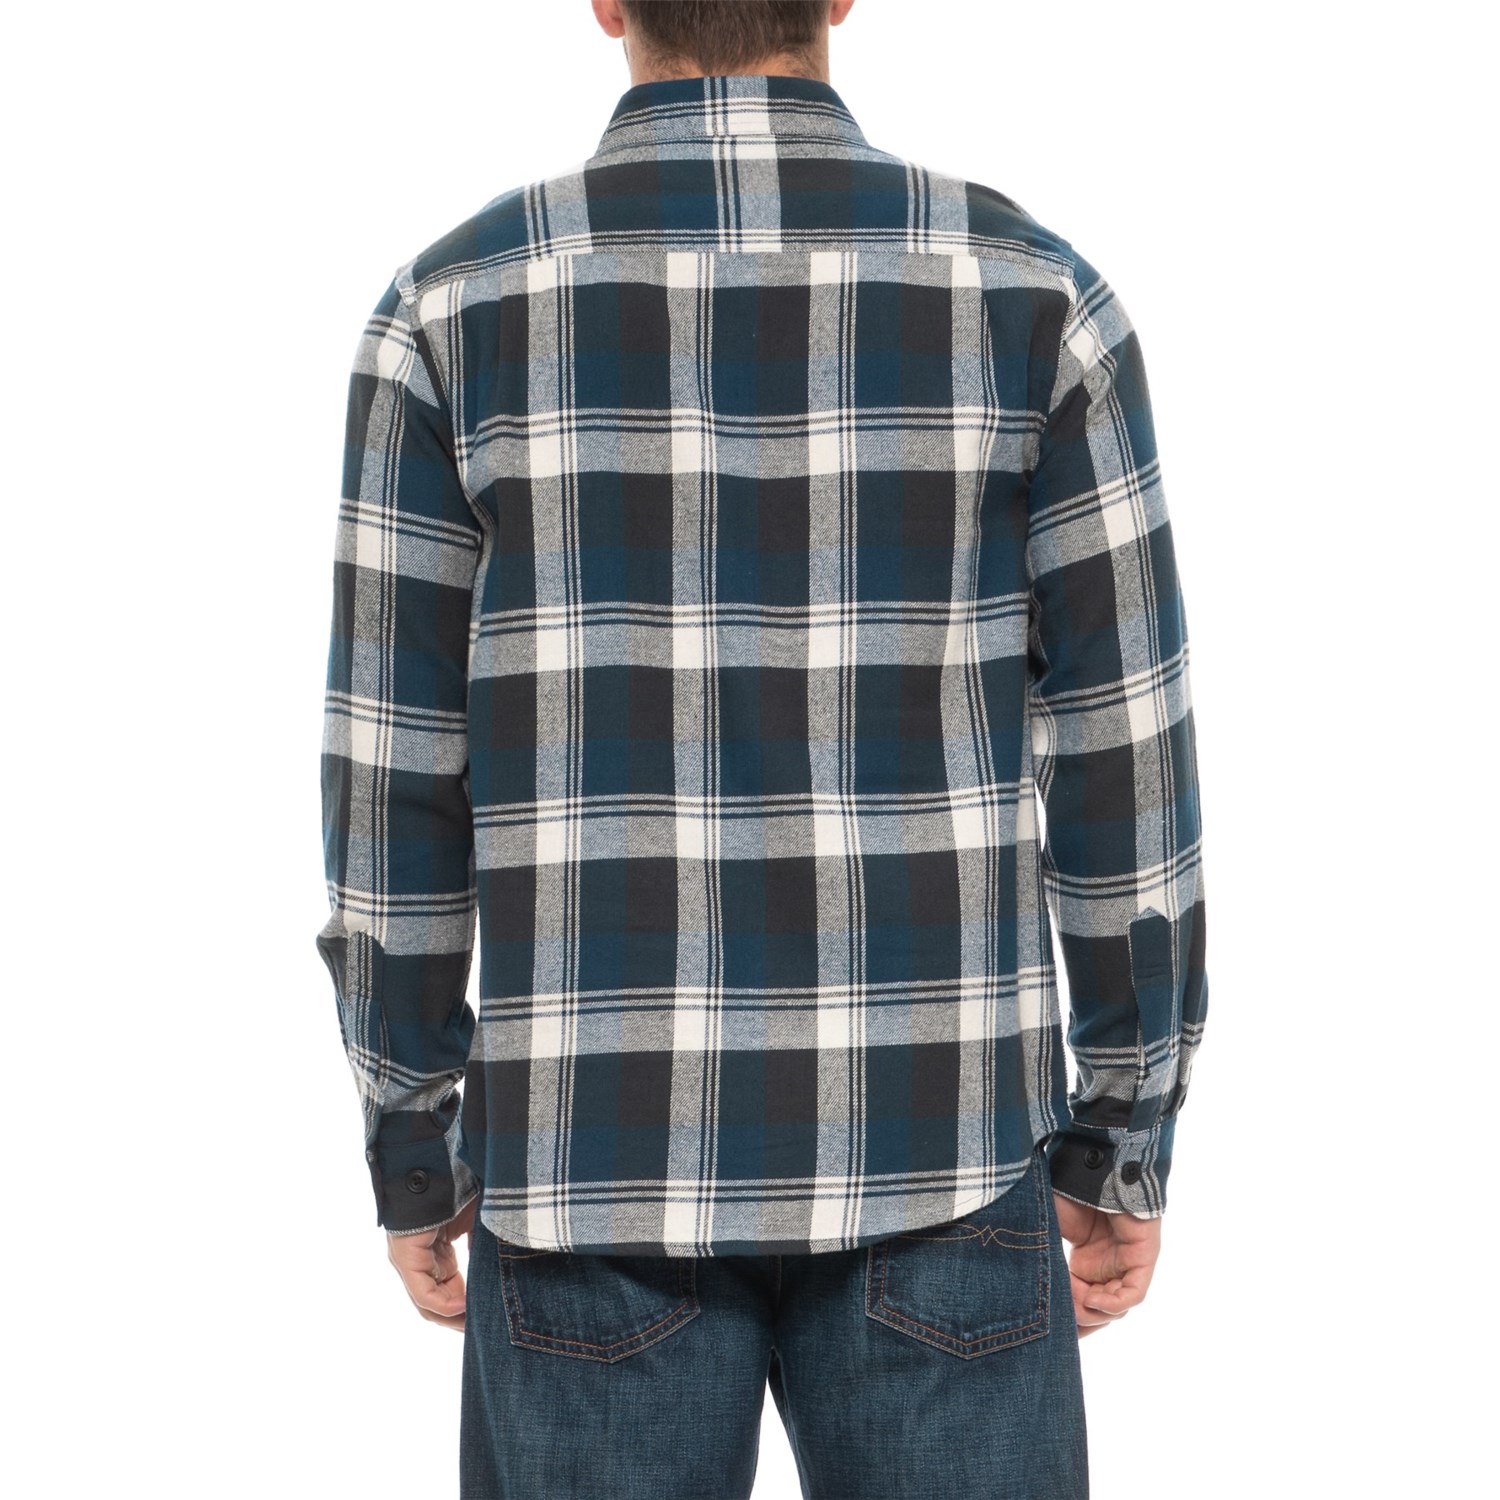 Coleman Plaid Flannel Shirt (For Men) - Save 51%